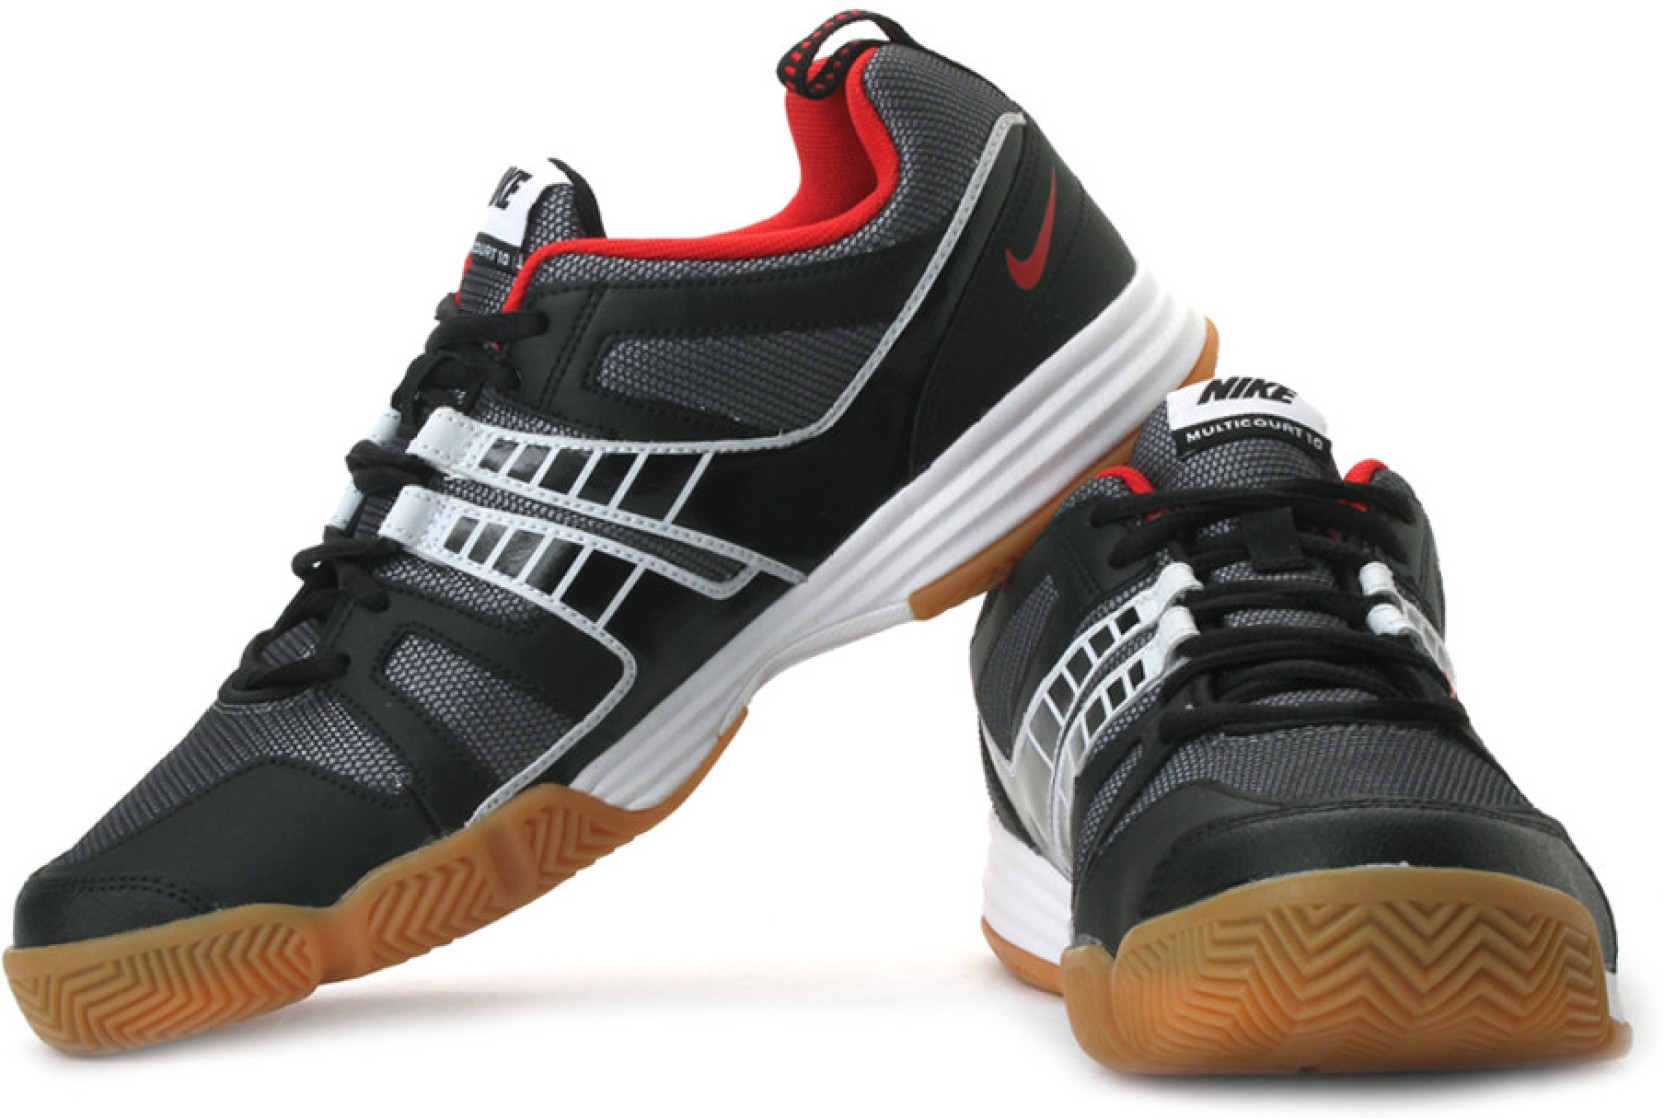 Nike Multicourt 10 Badminton Shoes - Buy Black Color Nike Multicourt 10 ...